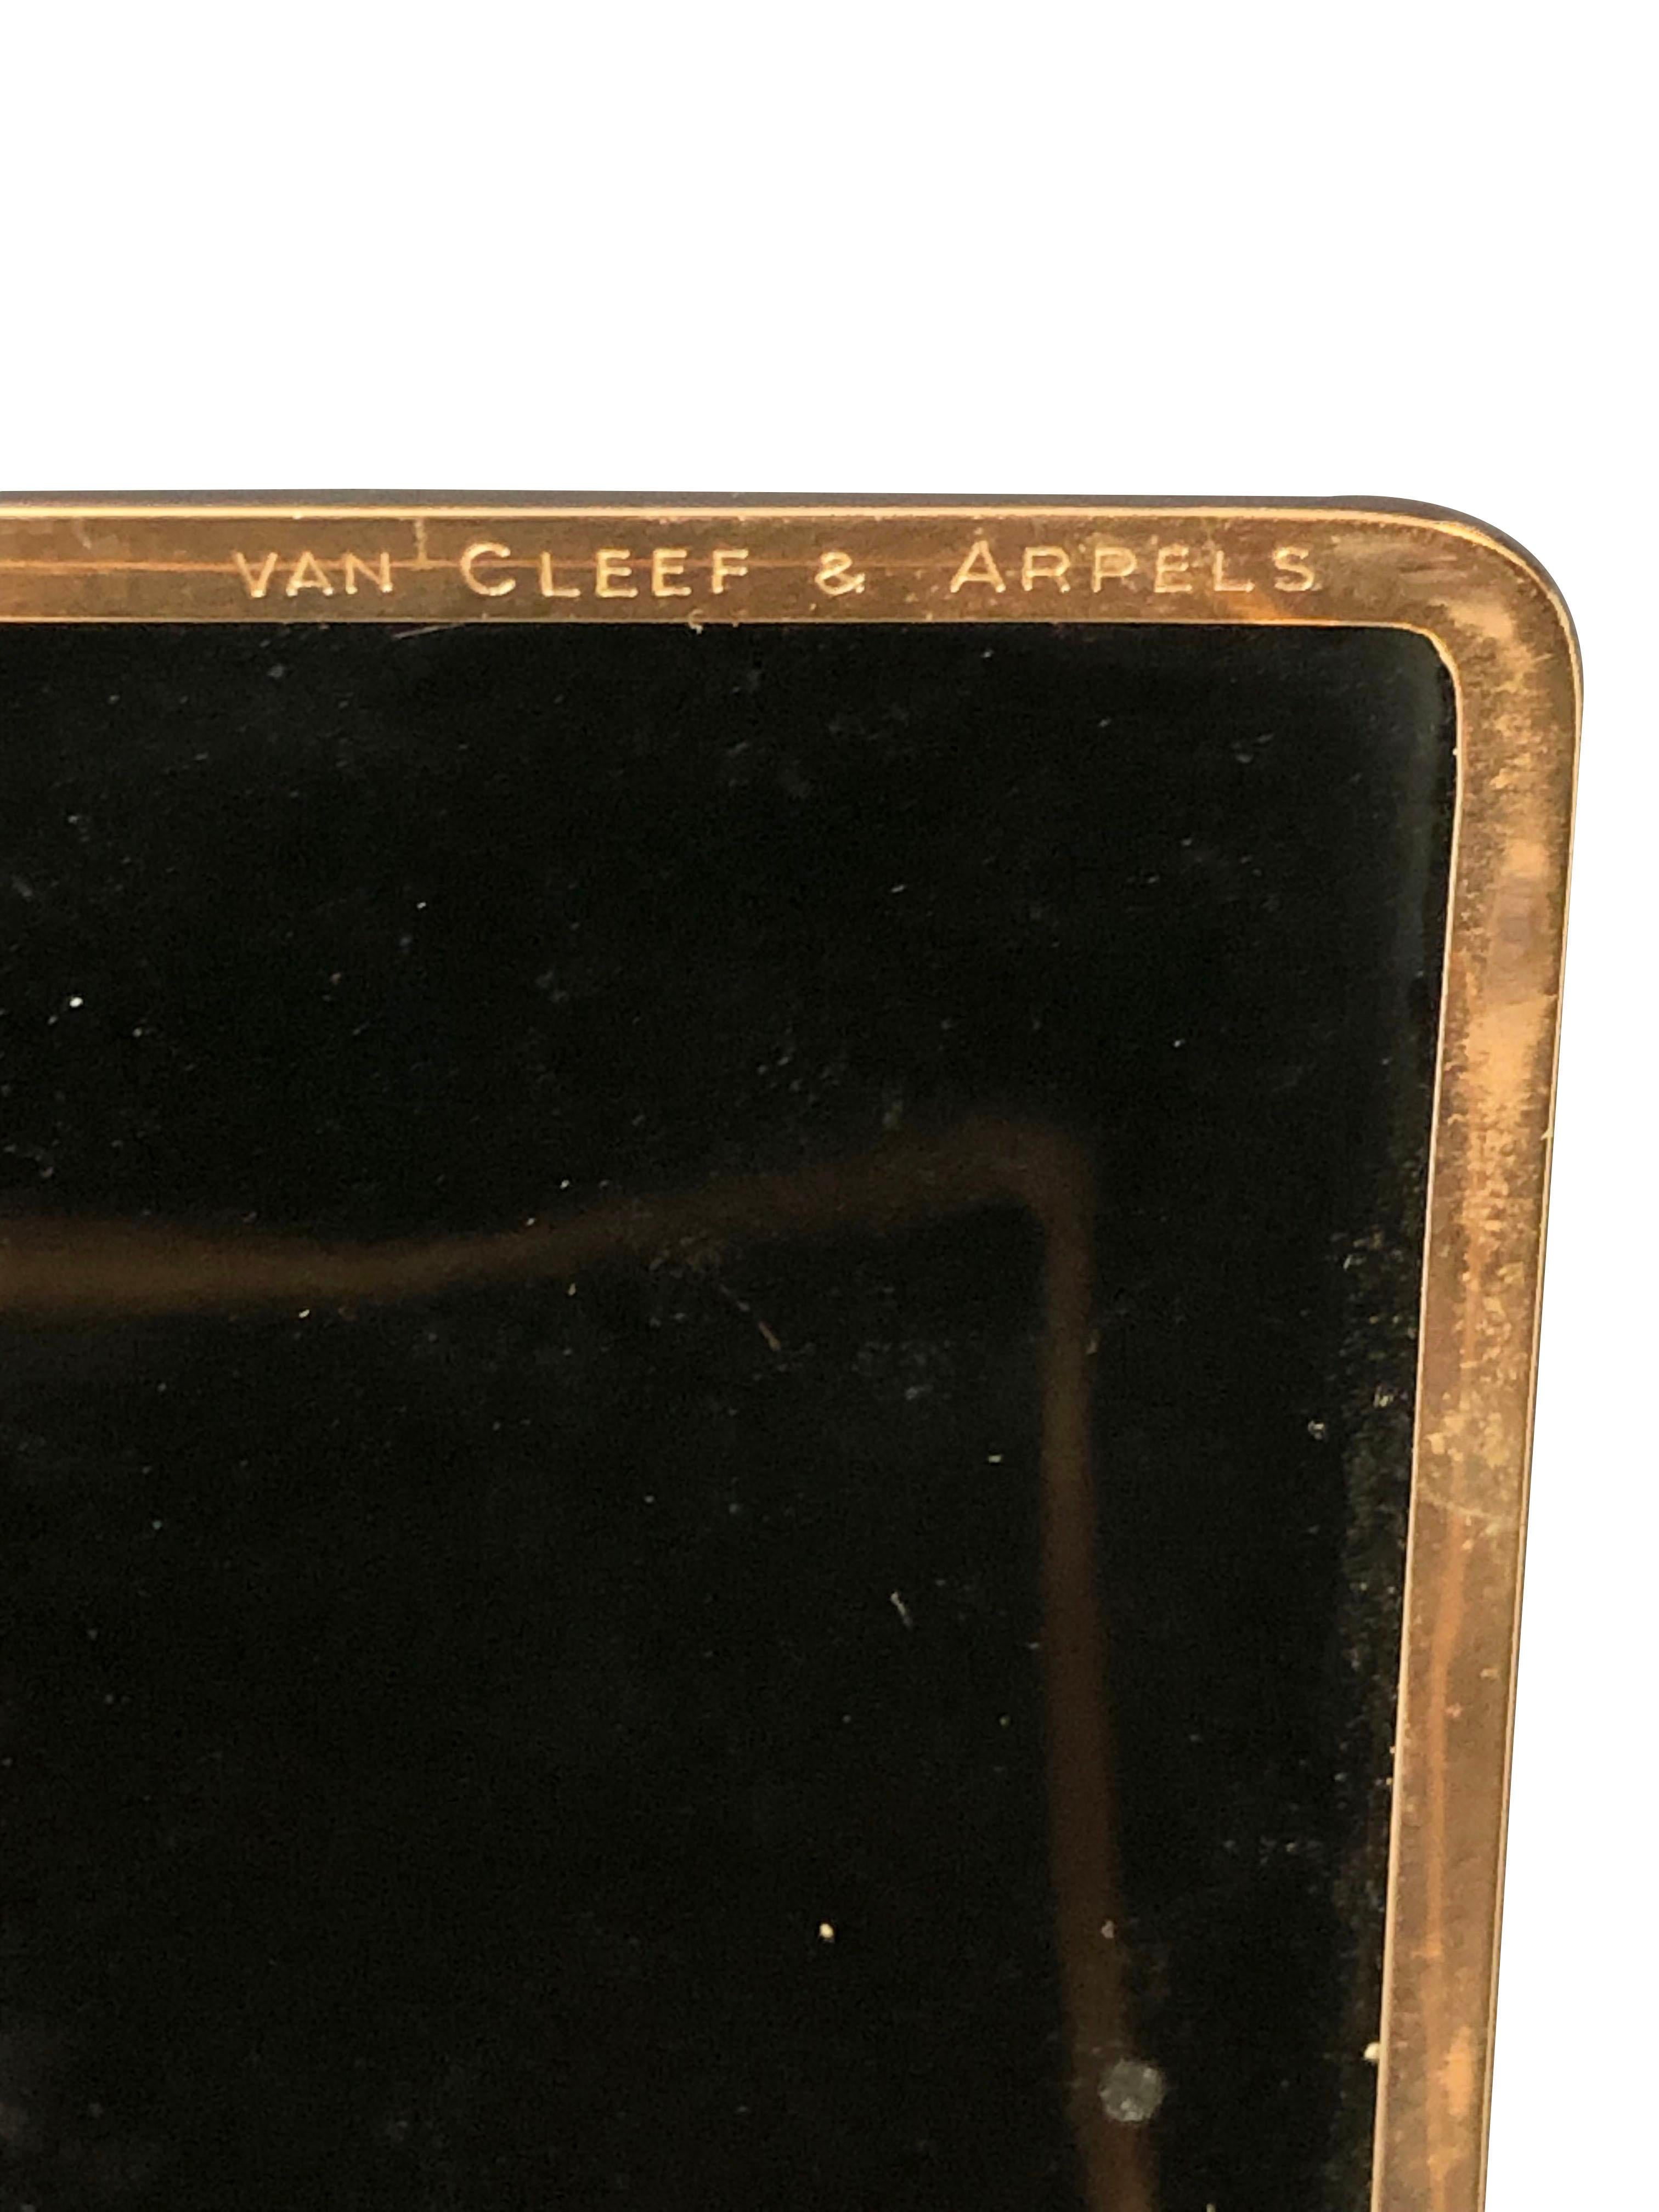 Van Cleef & Arpels Vintage Enamel Cigarette Case 4